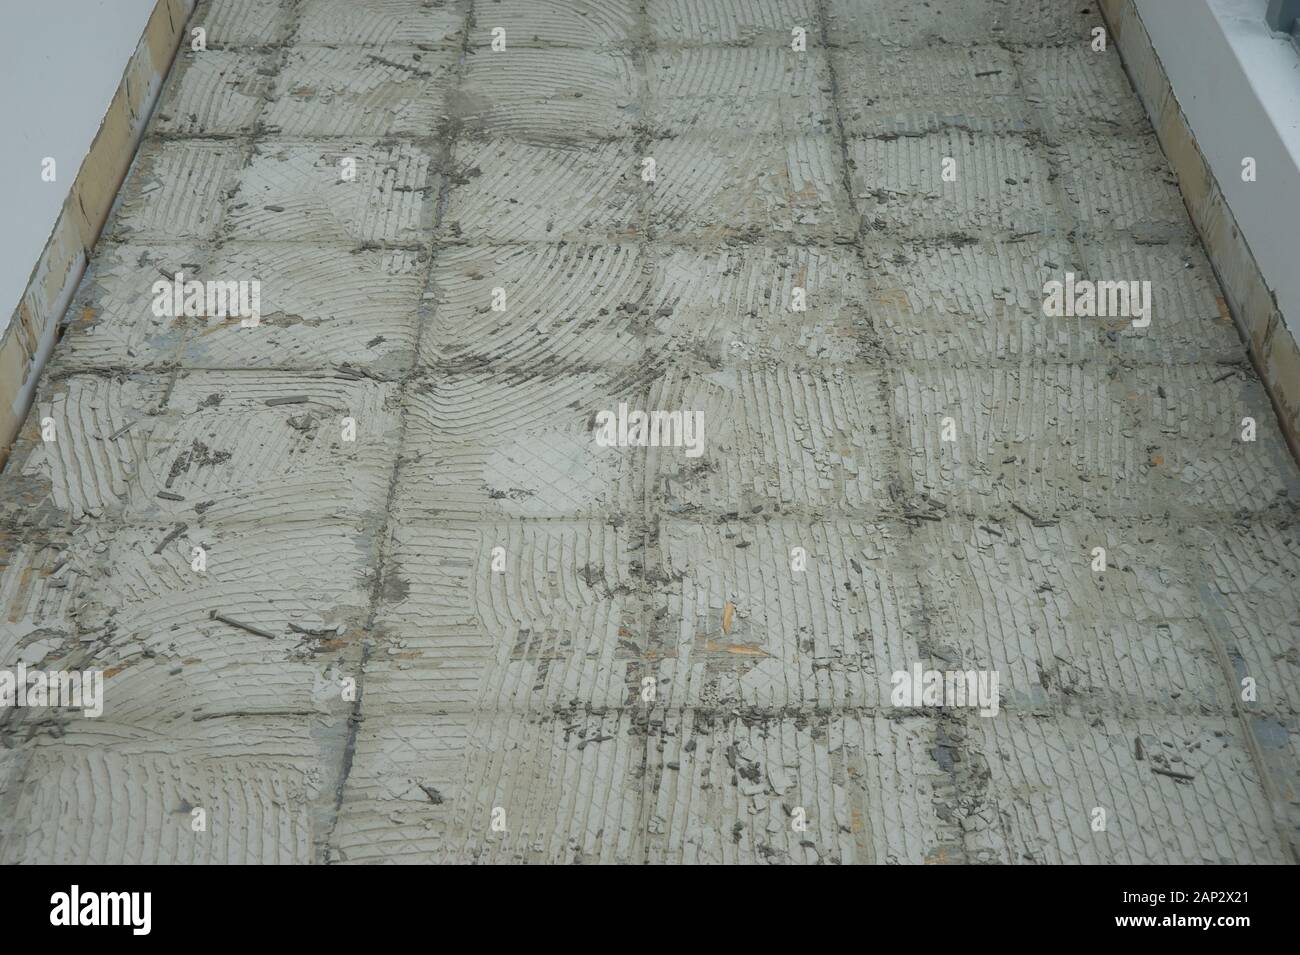 Reparatur eines Fliesenbodens - Repairing a Tile Floor Stock Photo